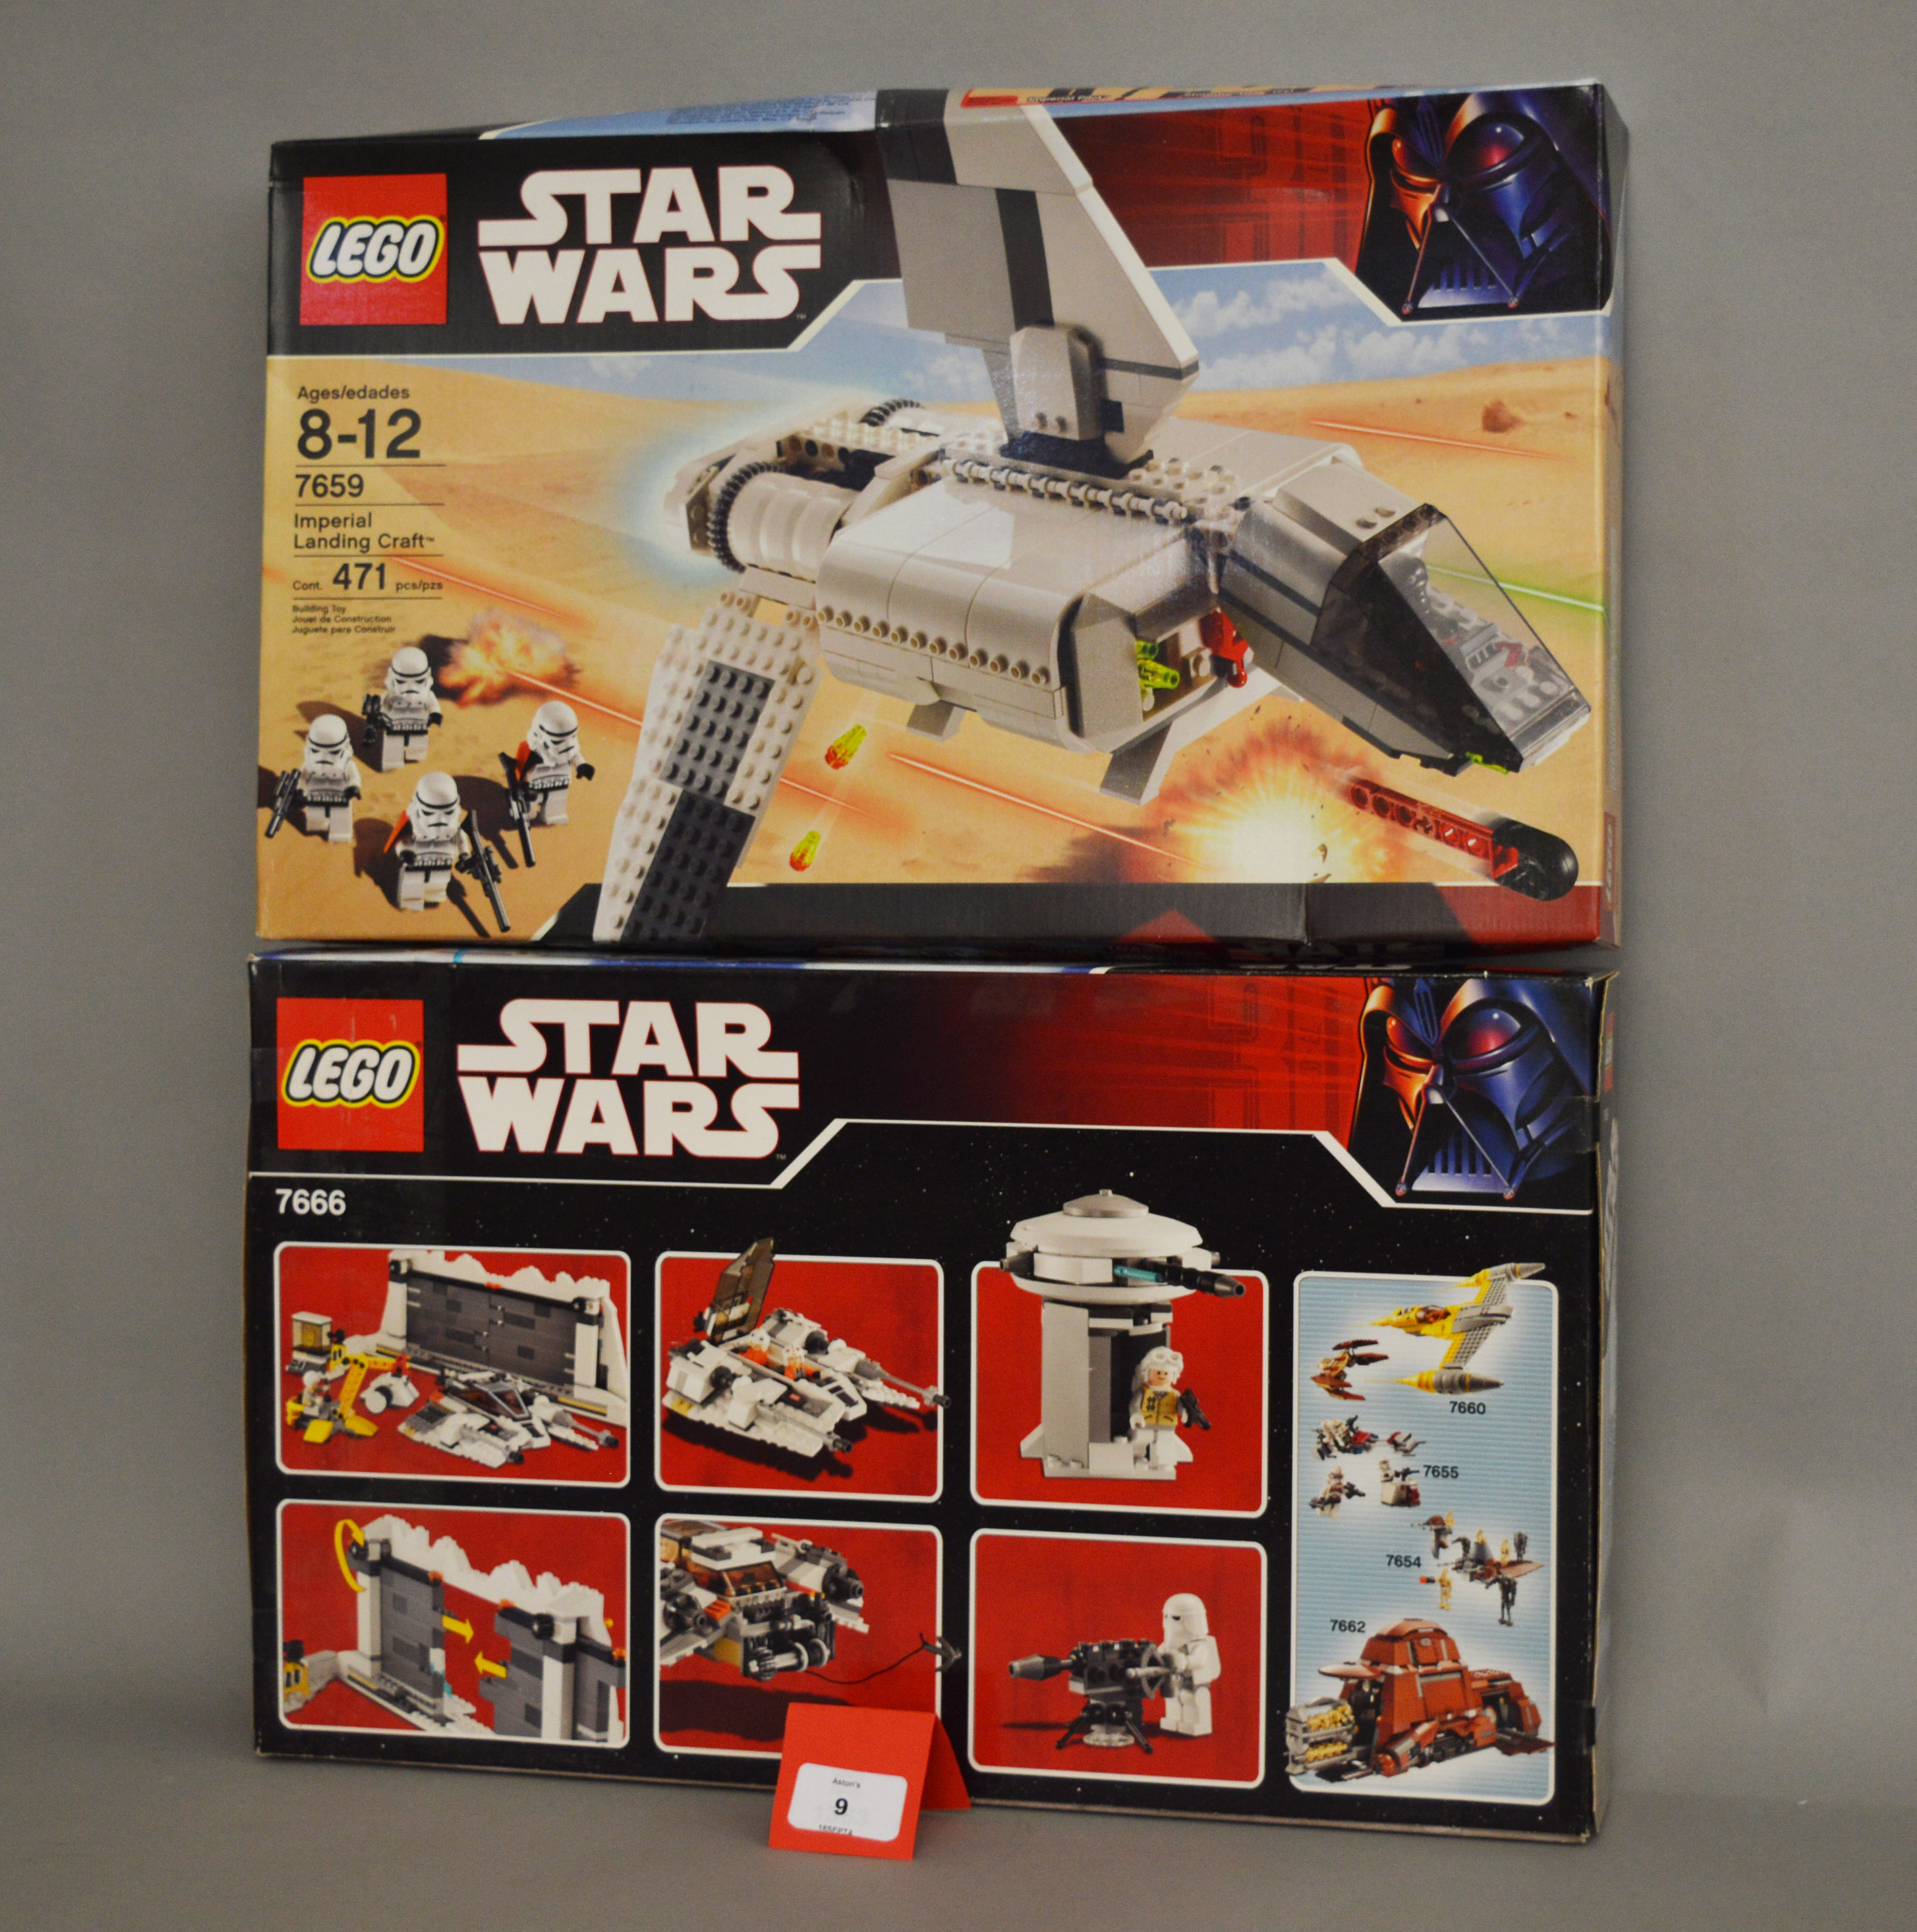 Two Lego Star Wars sets: 7659 Imperial Landing Craft; 7666 Hoth Rebel Base. Both sealed.